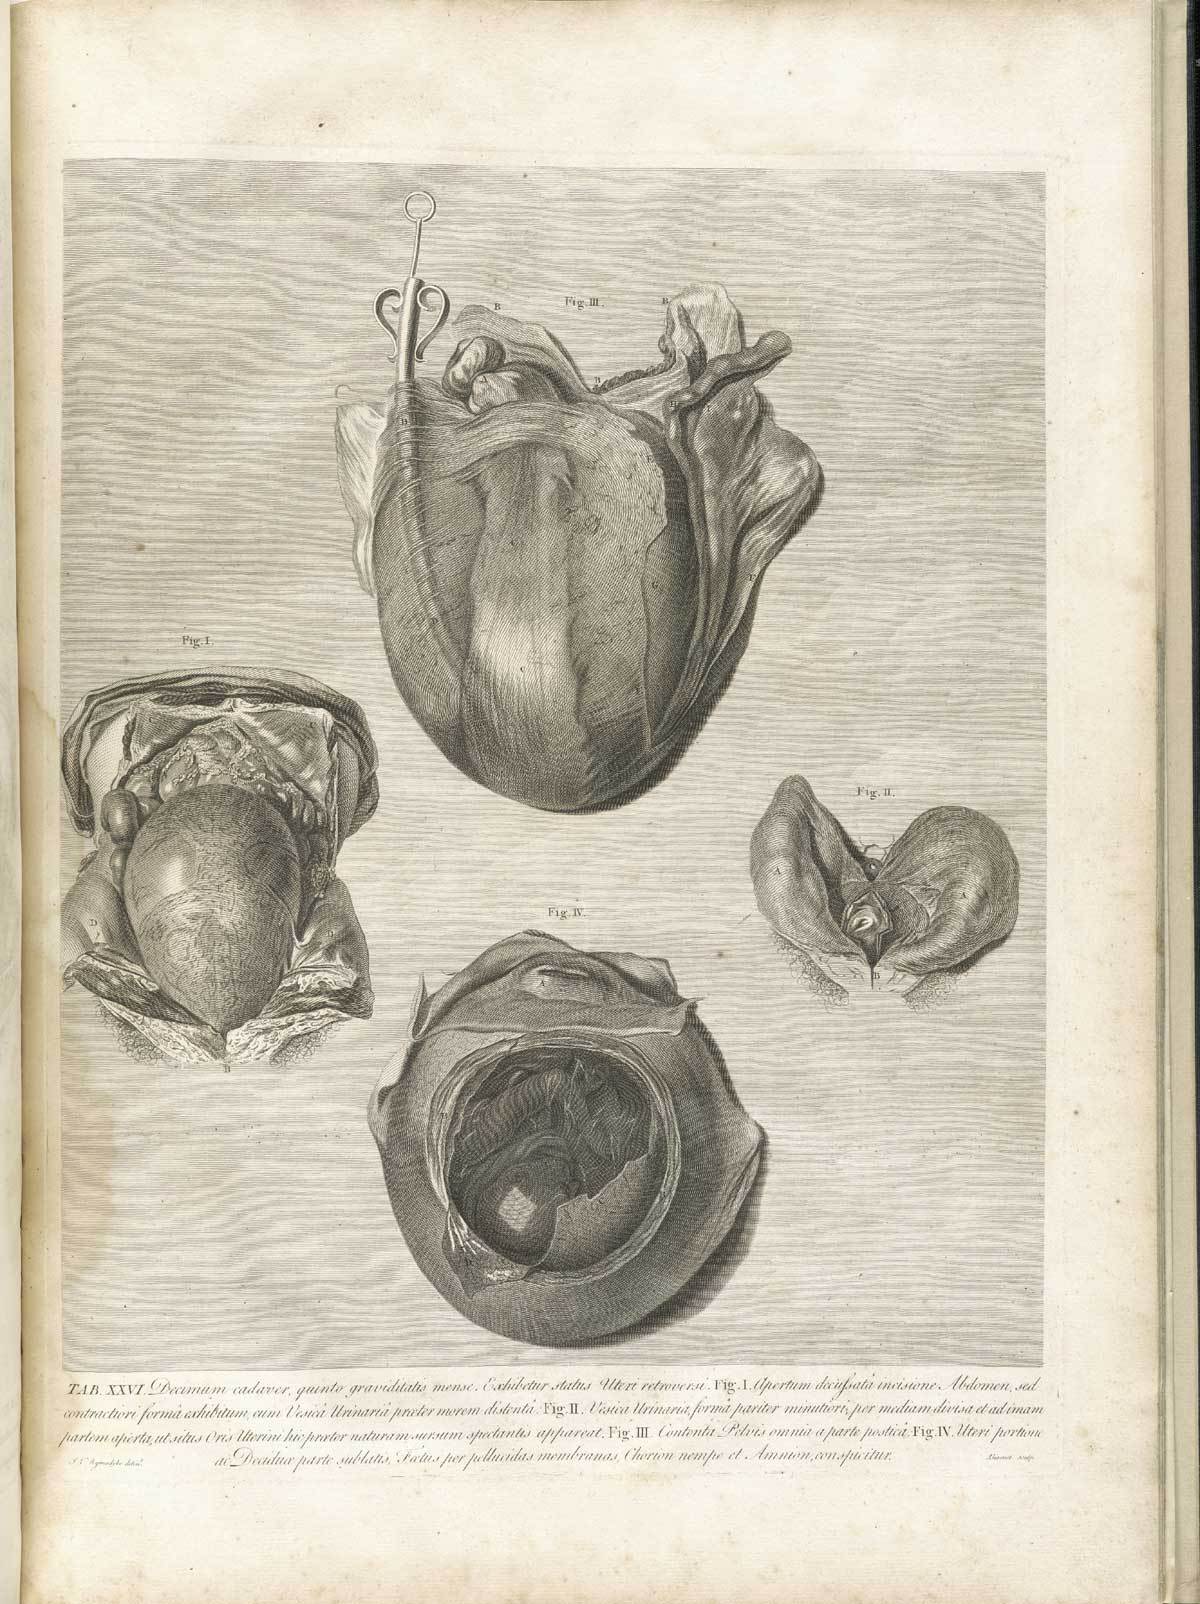 Table 26 of William Hunter's Anatomia uteri humani gravidi tabulis illustrata, featuring four anatomical views of a gravid uterus.